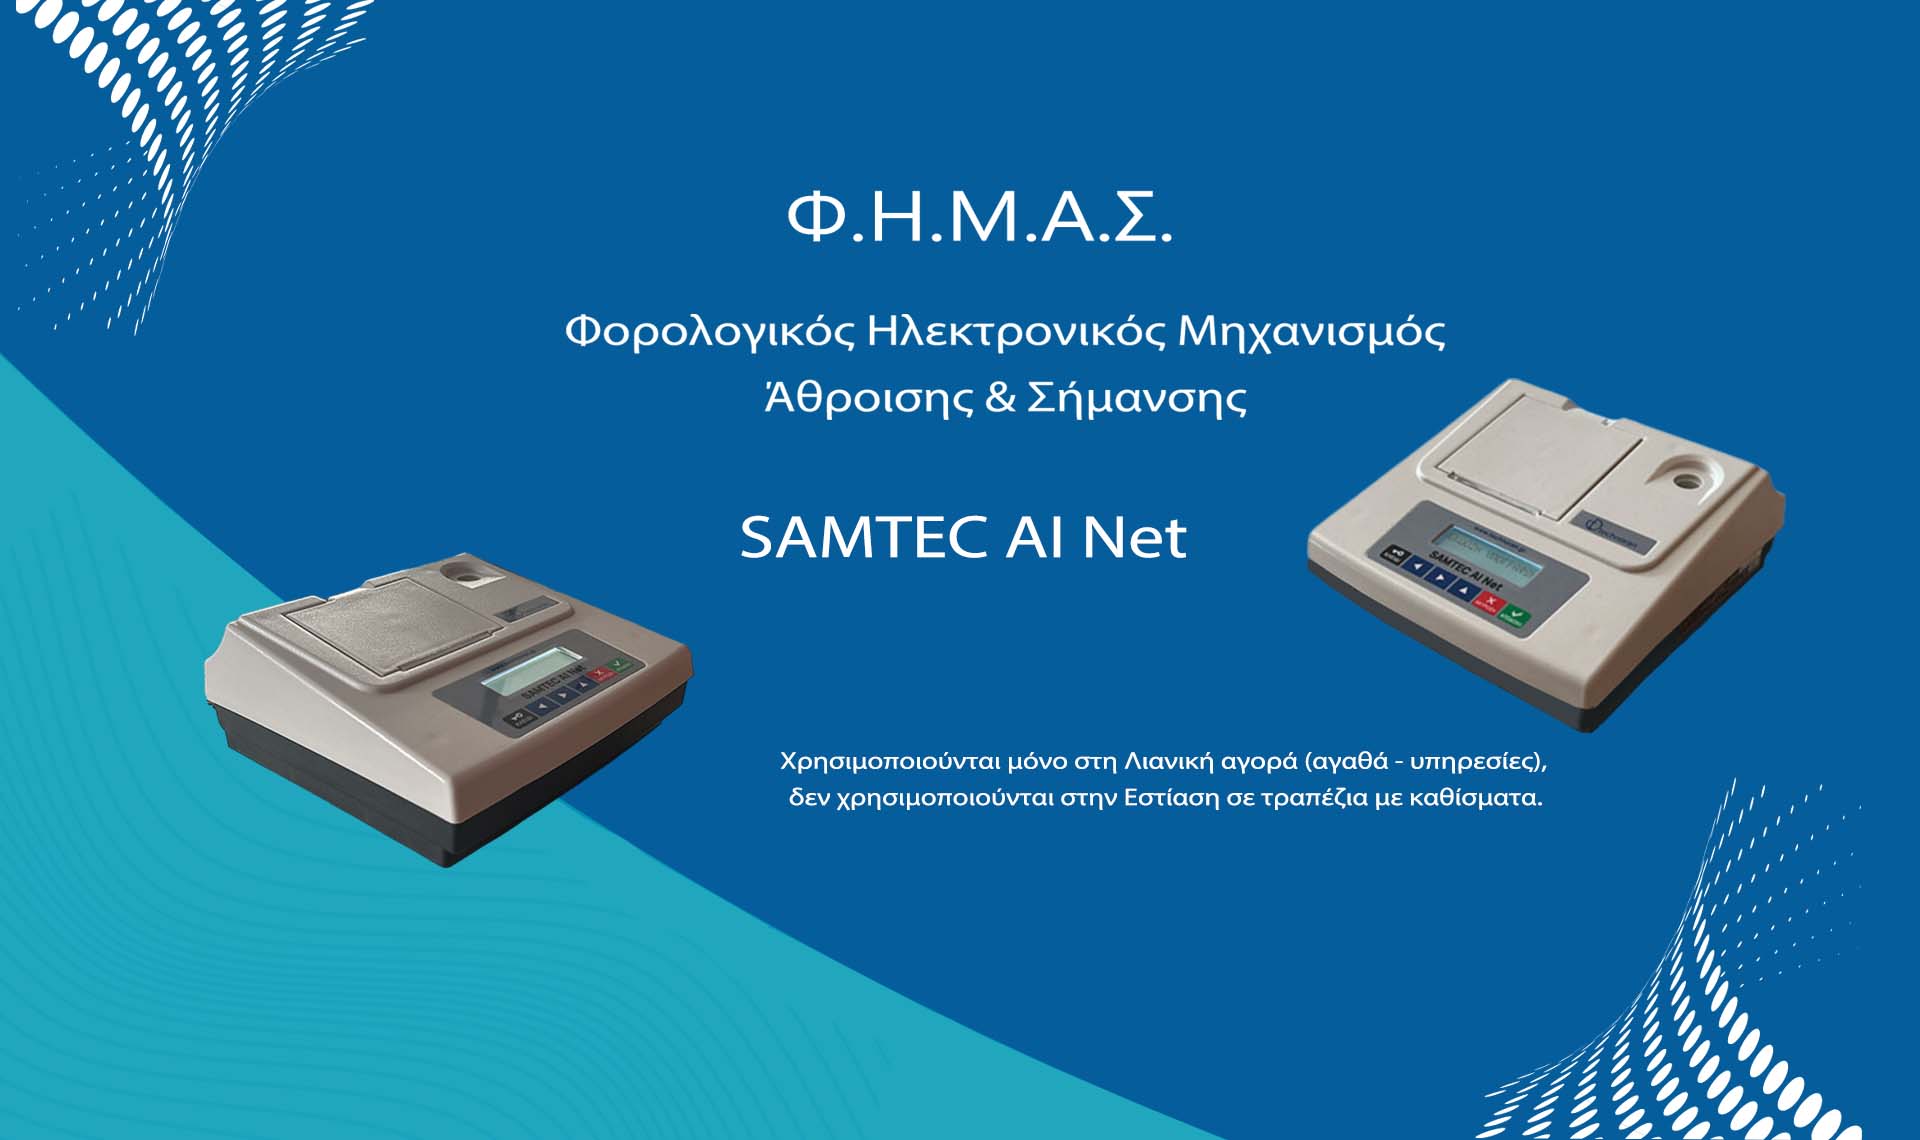 Samtecainet products family